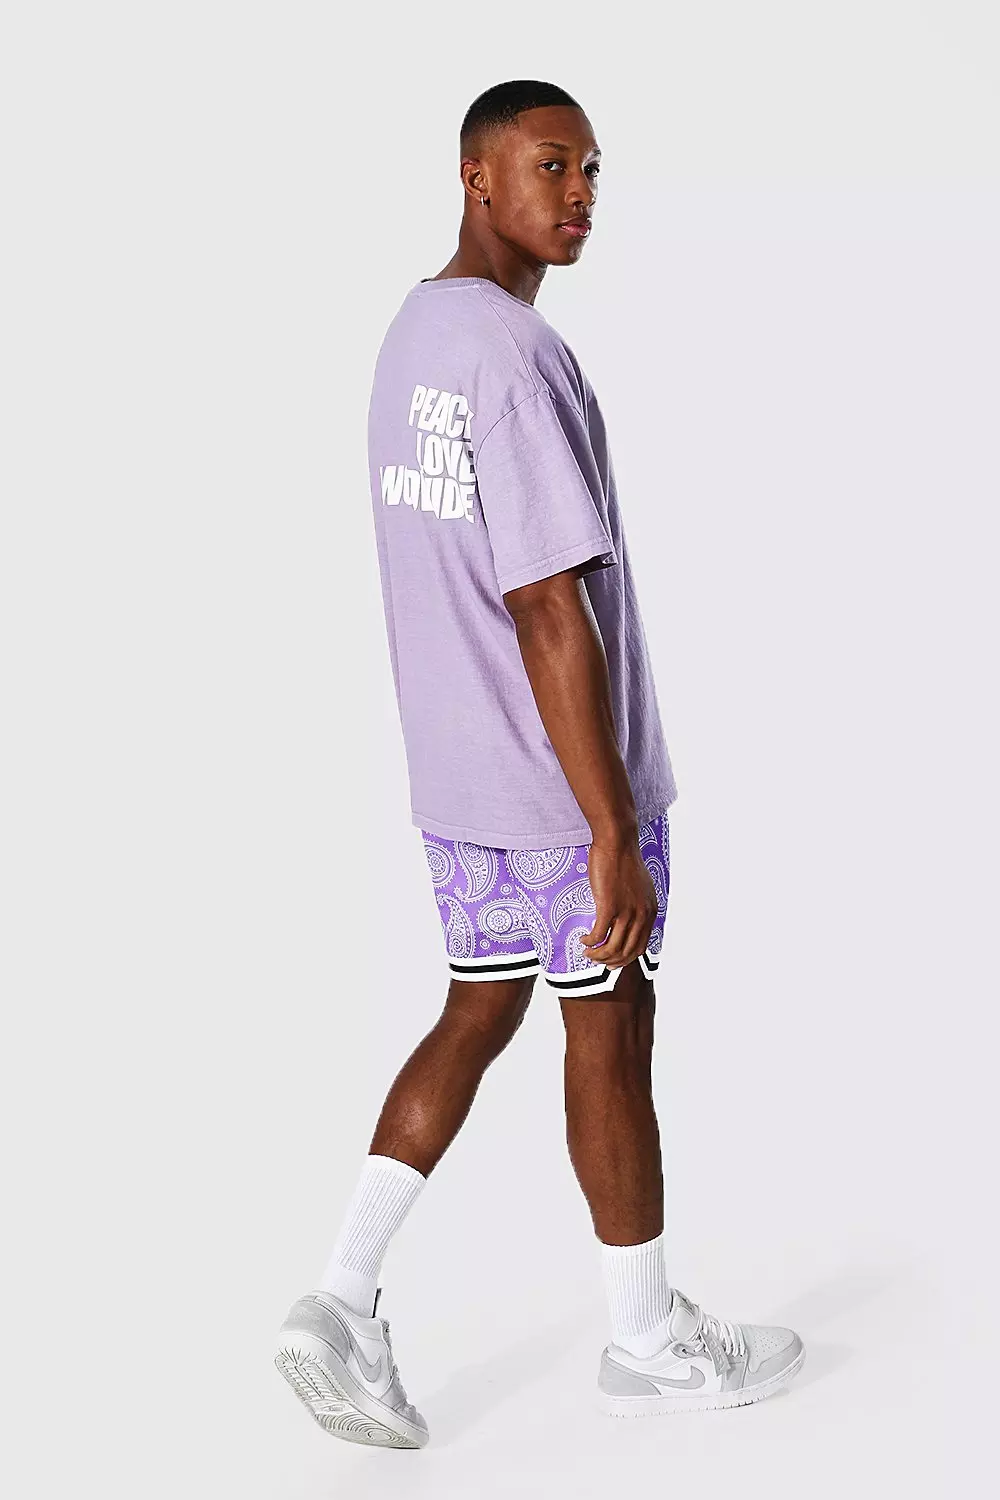 NBA_ Men Team Basketball Short Just Shorts Don Sport Wear With Pocket  Zipper Sweatpants Pant Blue White Black Red Purple Stitch Good Hip Hop Man'' nba''jersey 